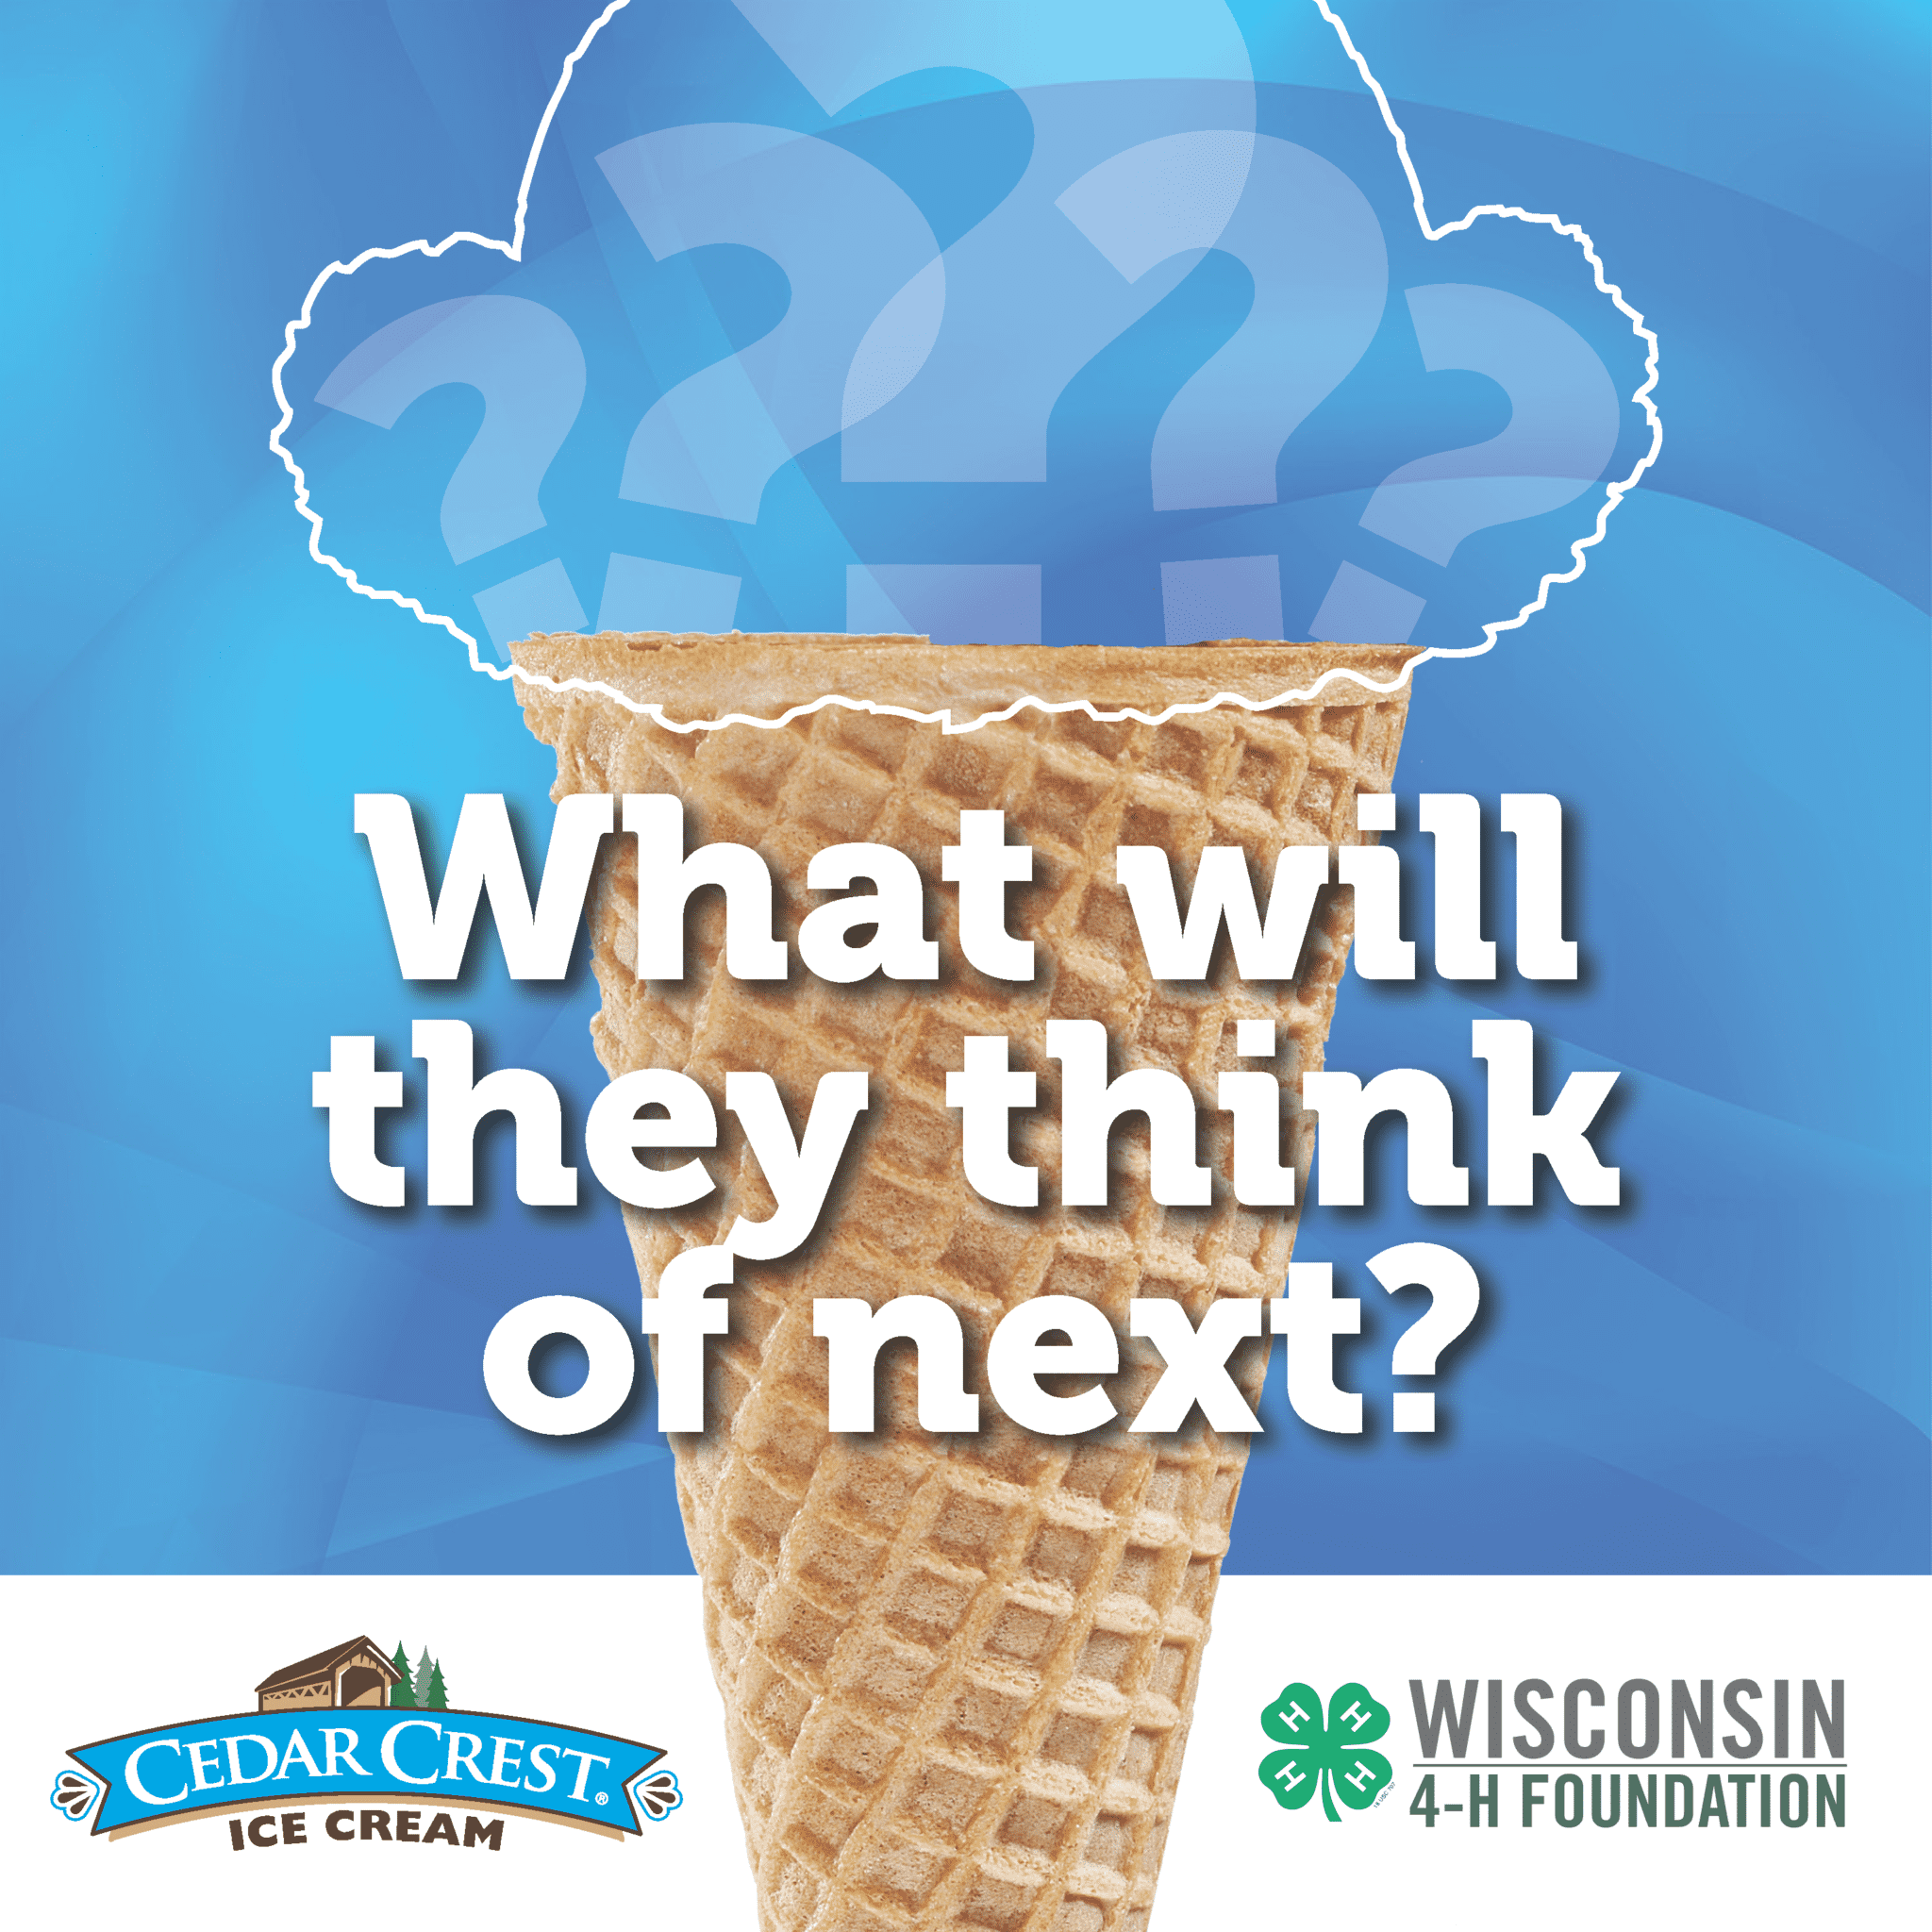 Cedar Crest Ice Cream, Wisconsin 4-H Foundation team up for Flavor Creation Contest